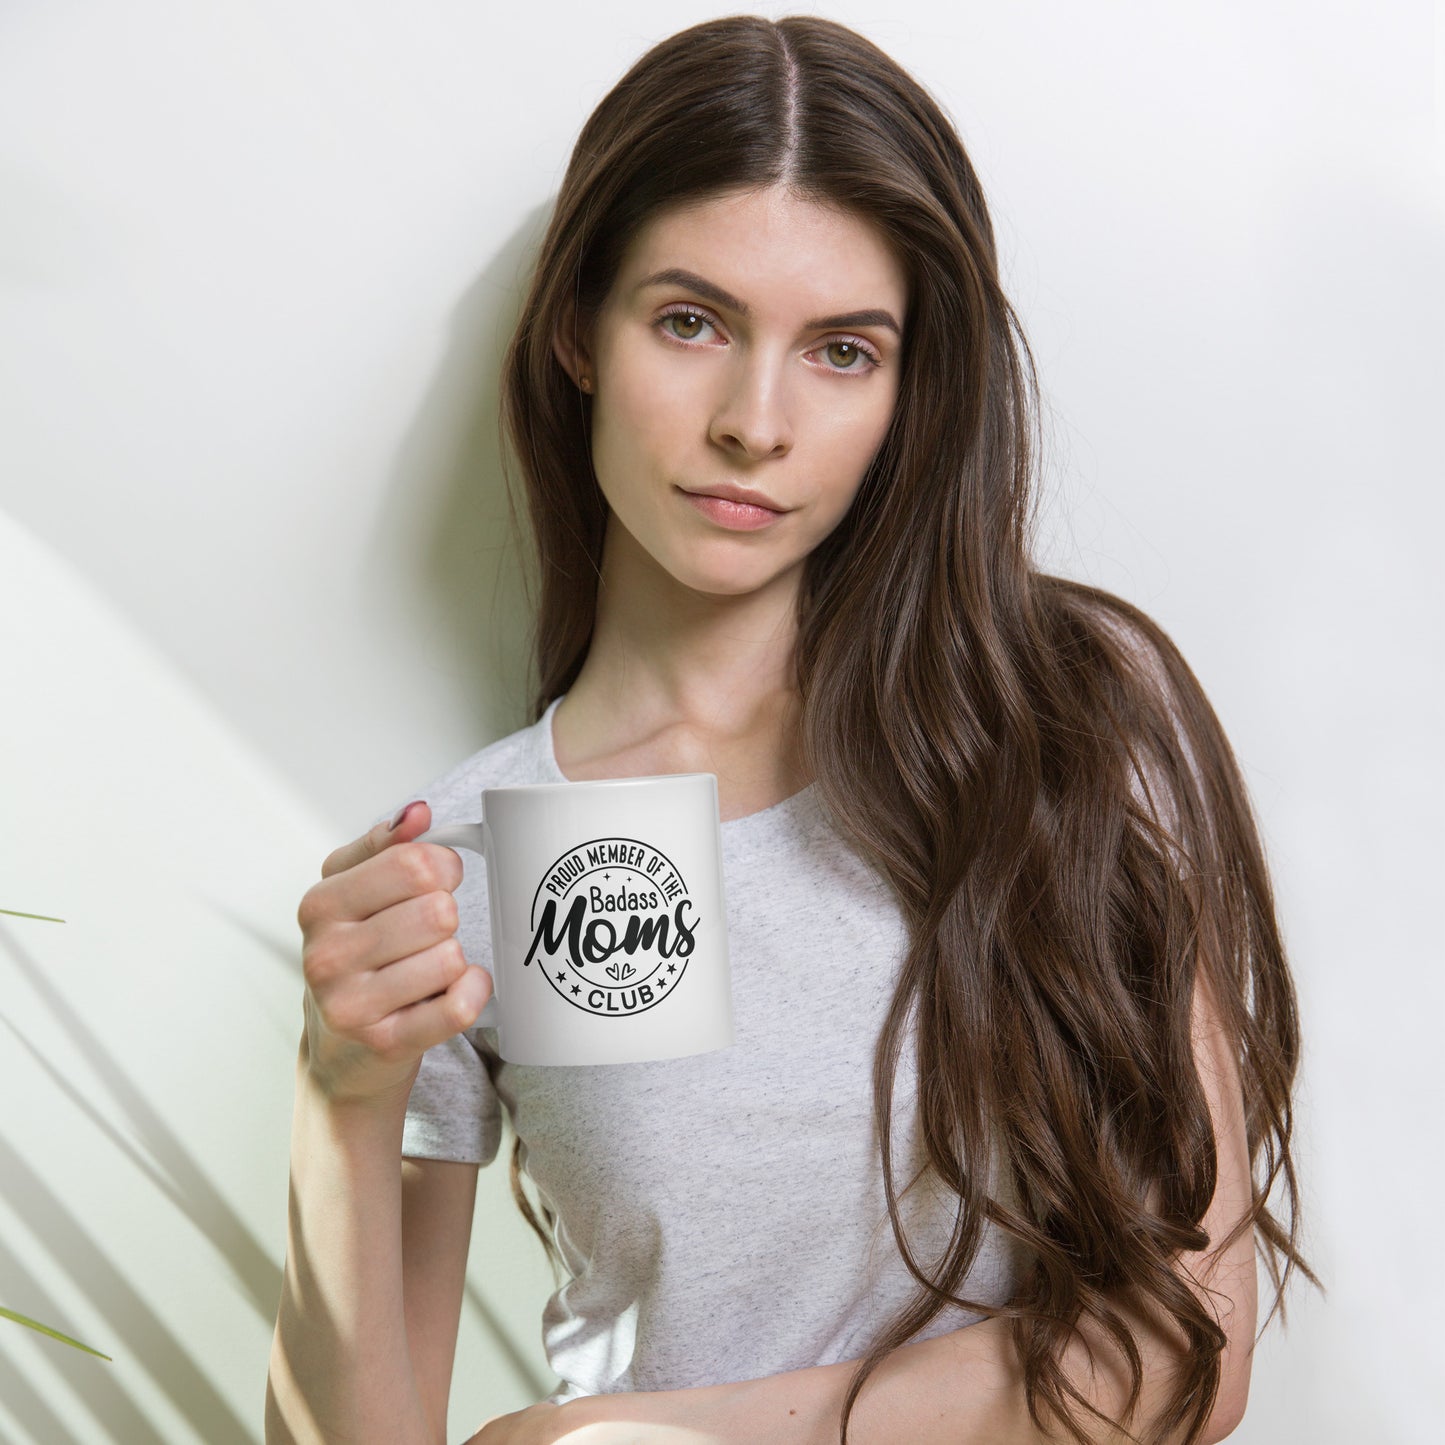 Proud Member of the Badass Moms Club White Ceramic Coffee Mug